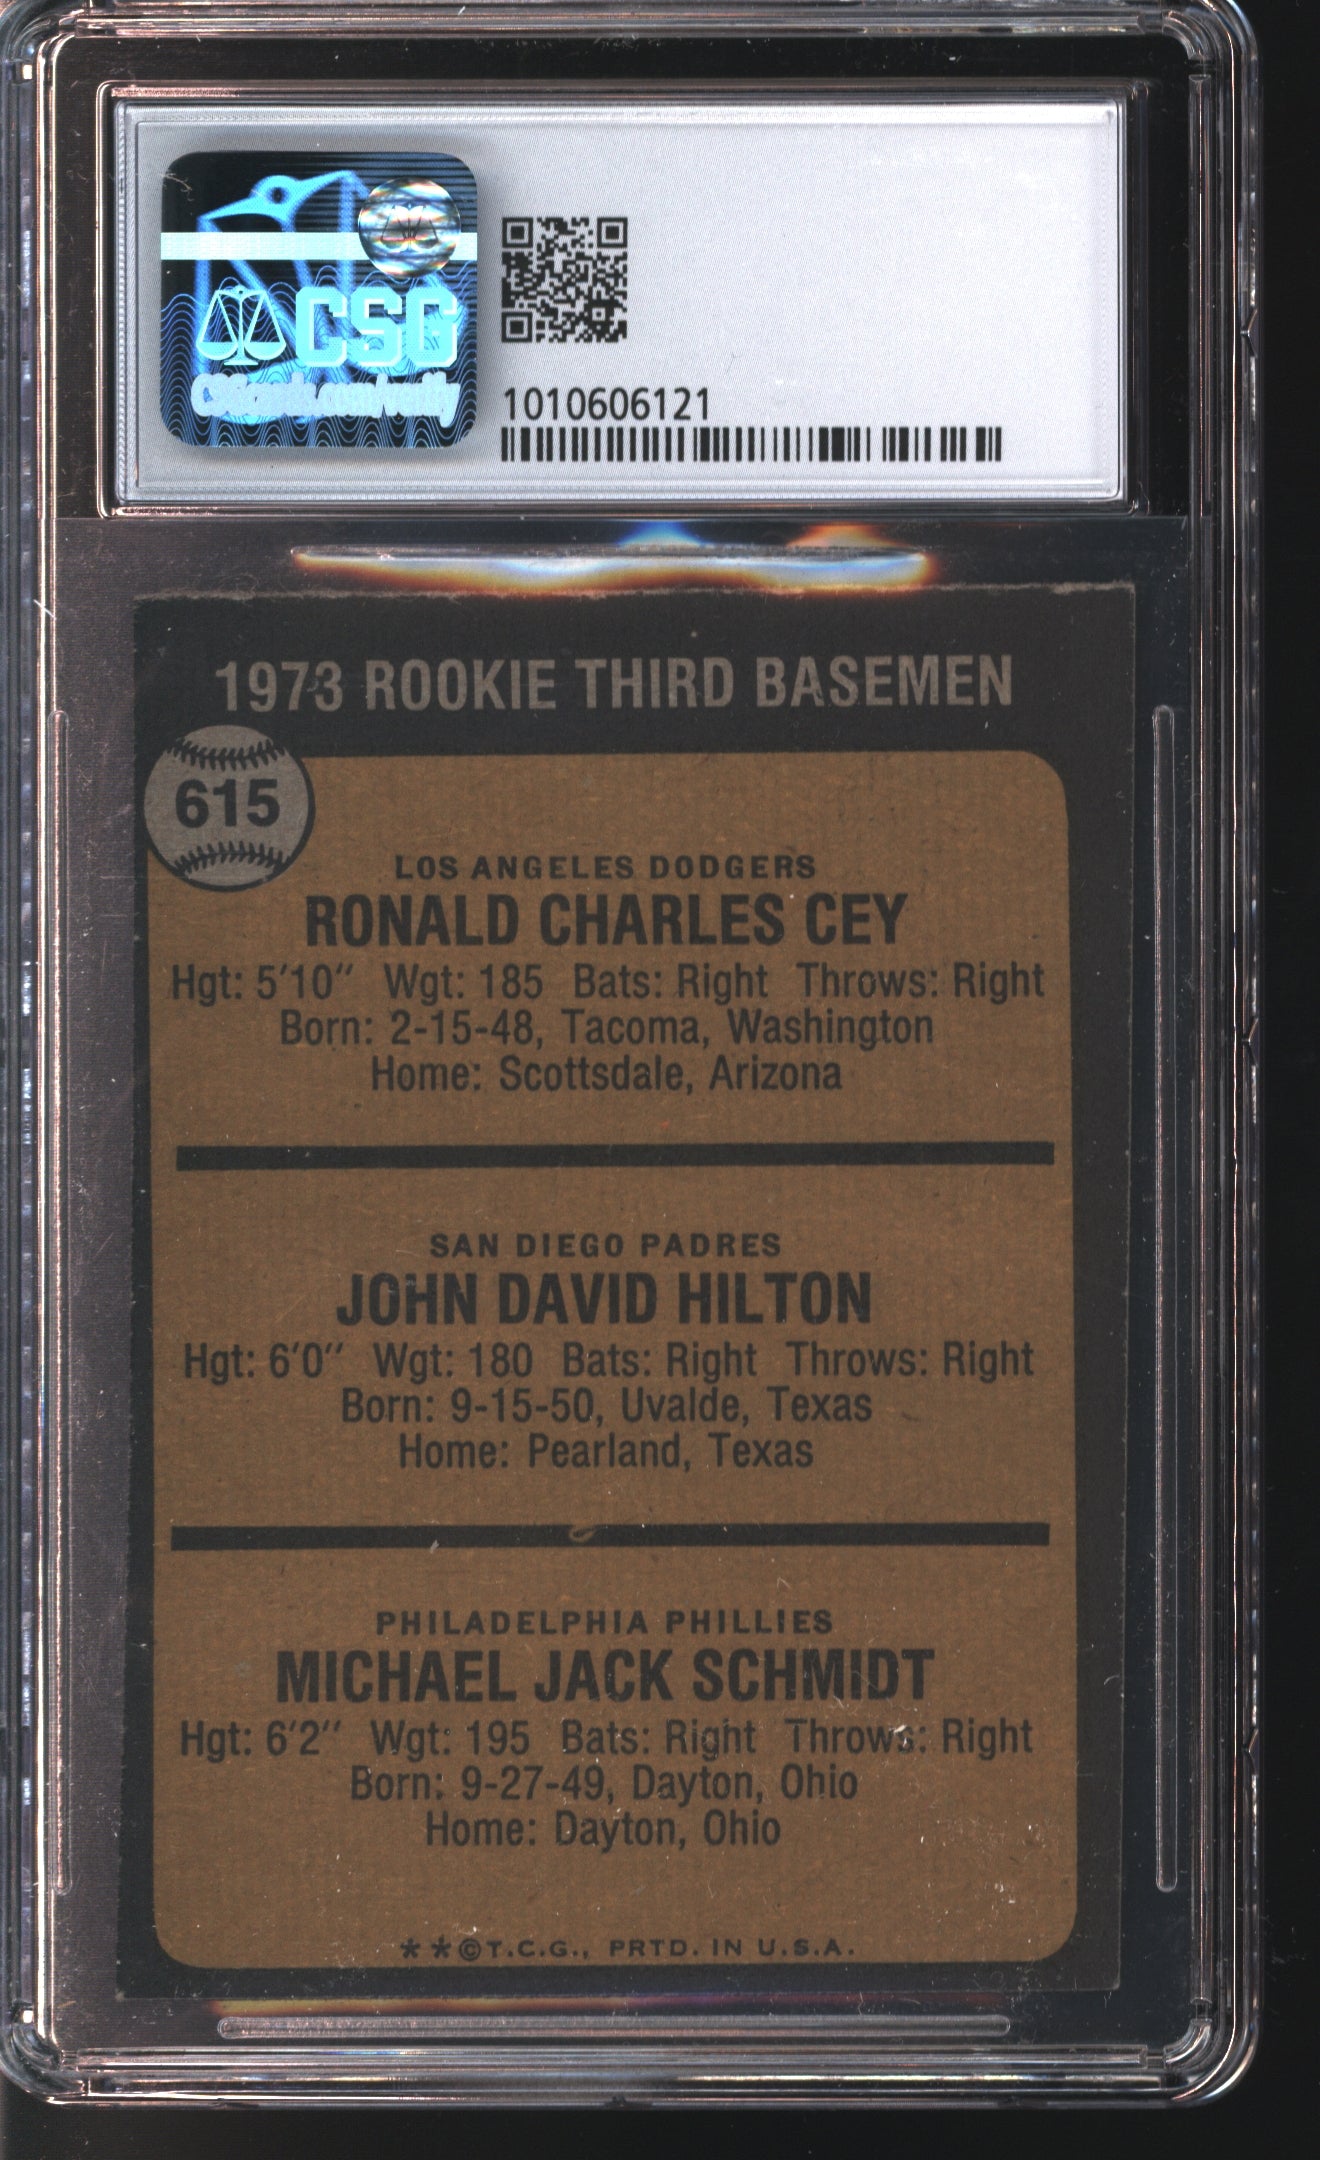 1973 Topps Rookie Third Basemen Mike Schmidt rookie Card #615 Graded CSG 5